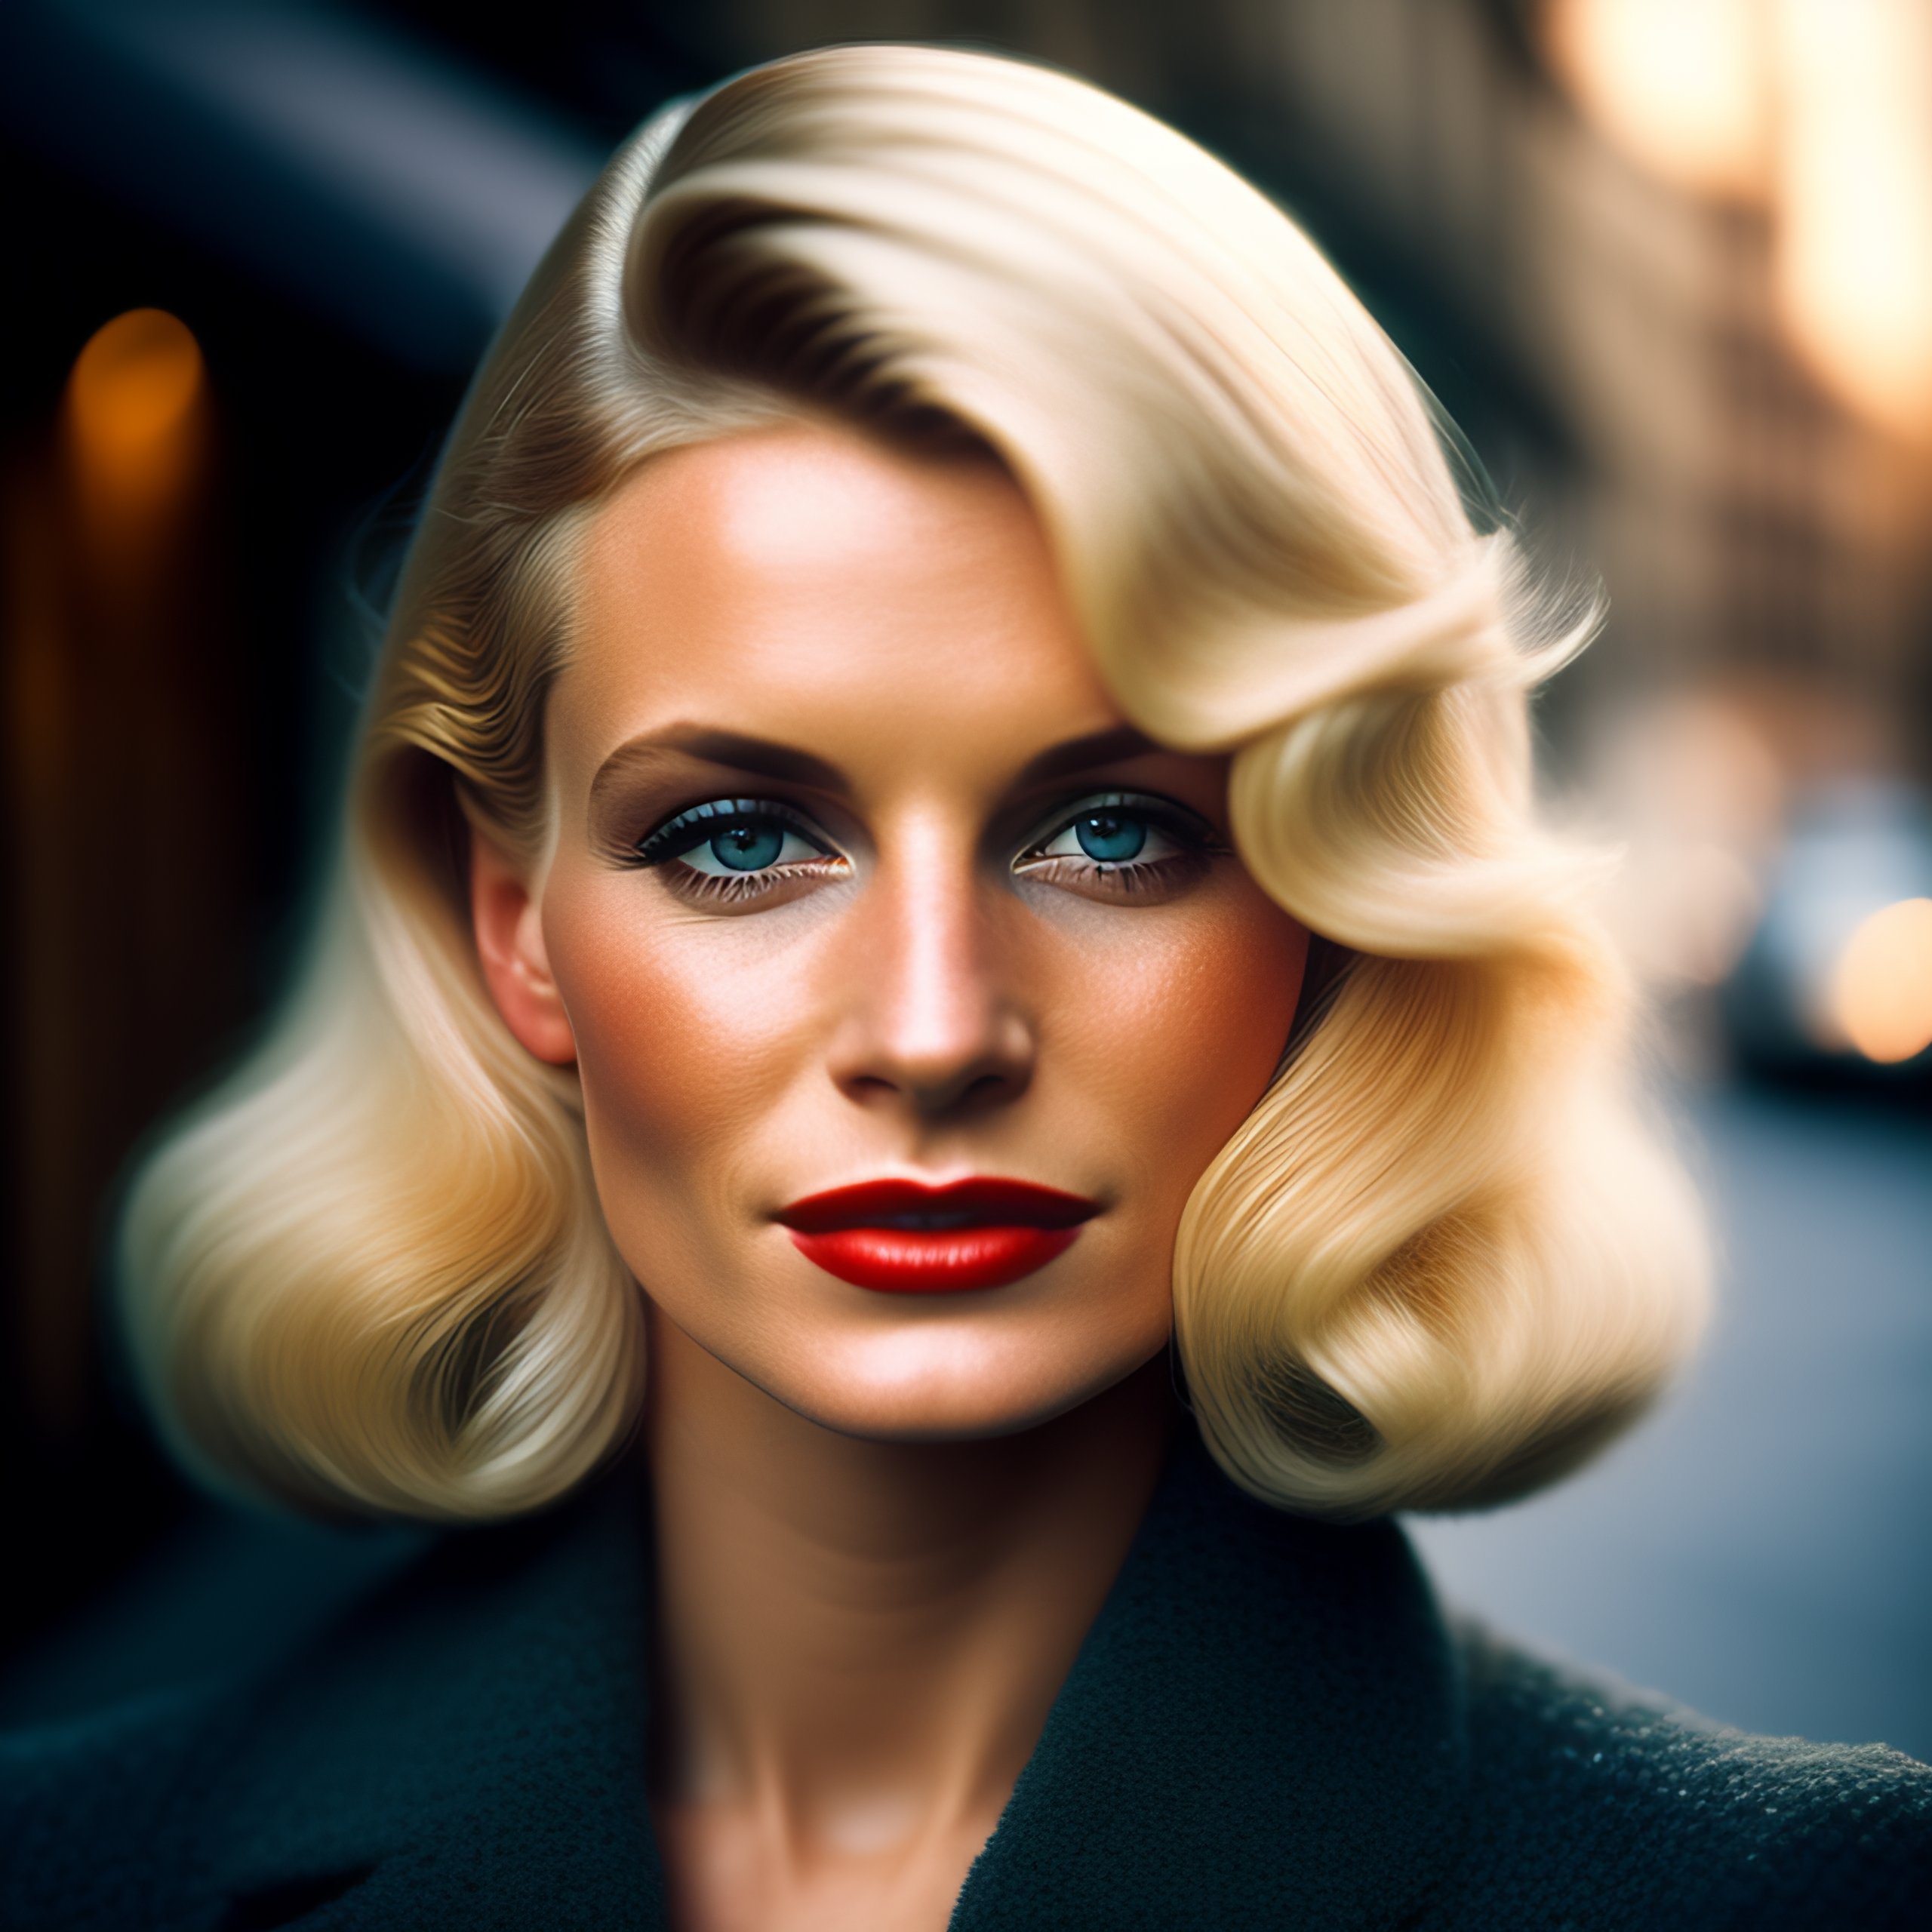 Lexica Blond British Female 30s Perfect Portrait London Medium Format Fuji Superia 400